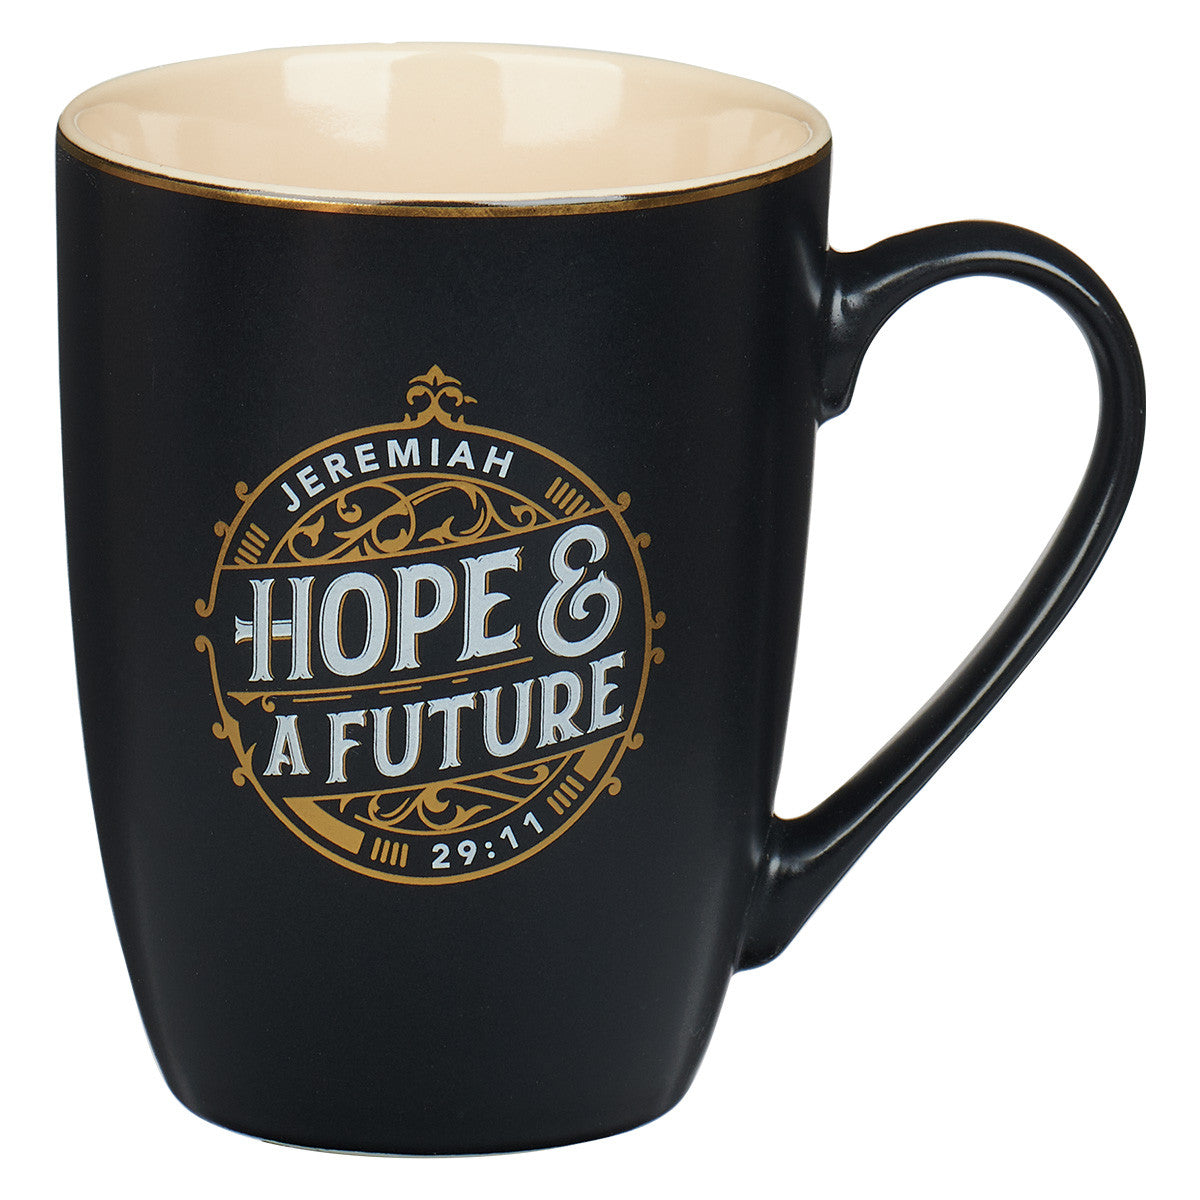 Hope and a Future Black and Gold Ceramic Coffee Mug - Jeremiah 29:11